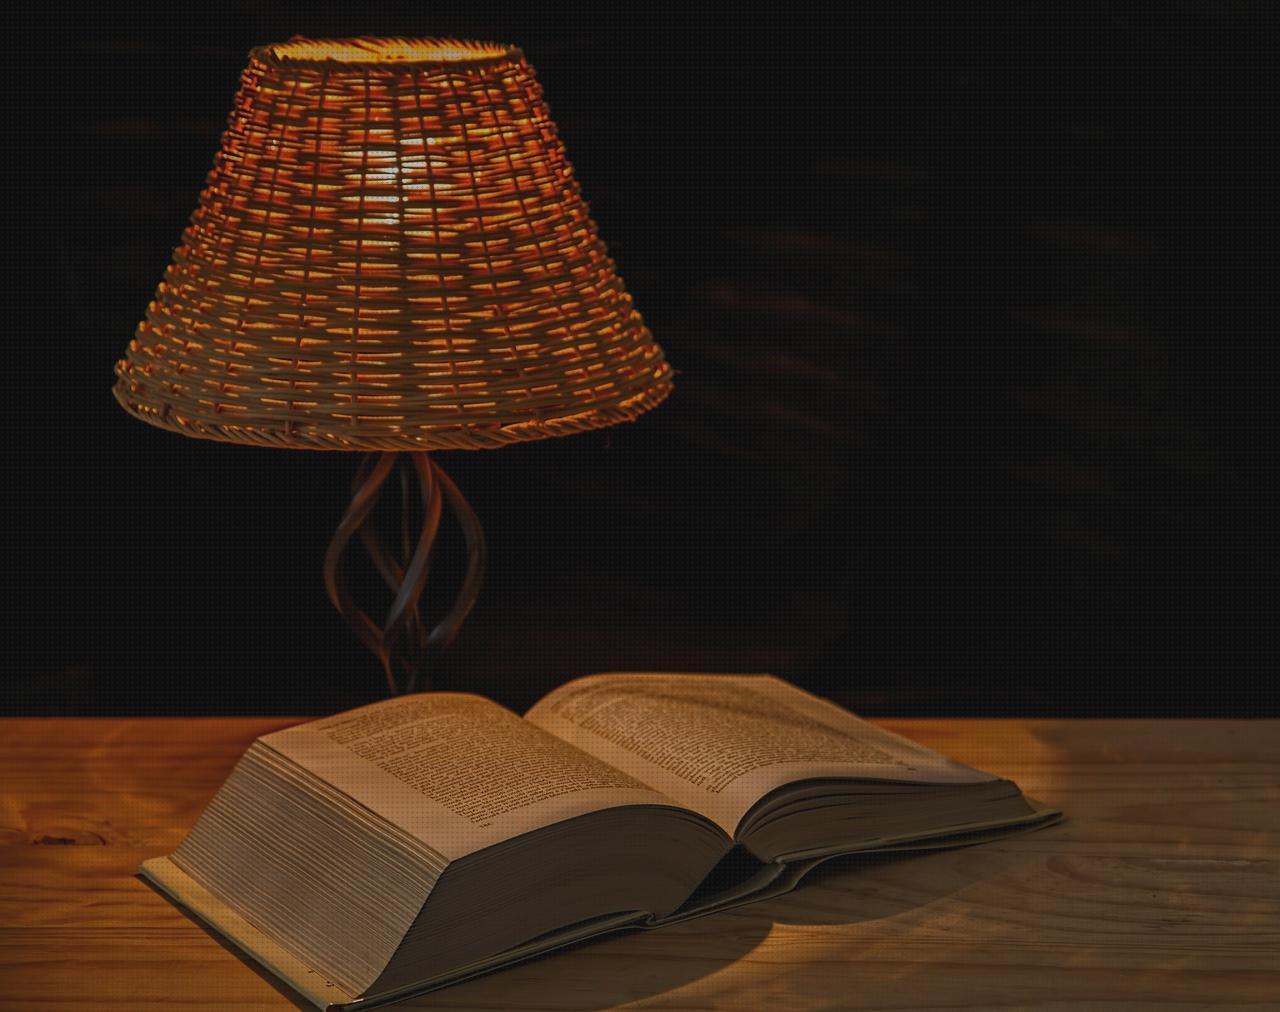 ¿Dónde poder comprar lámpara lectura lampara linterna lampara lectura cabecero cama?